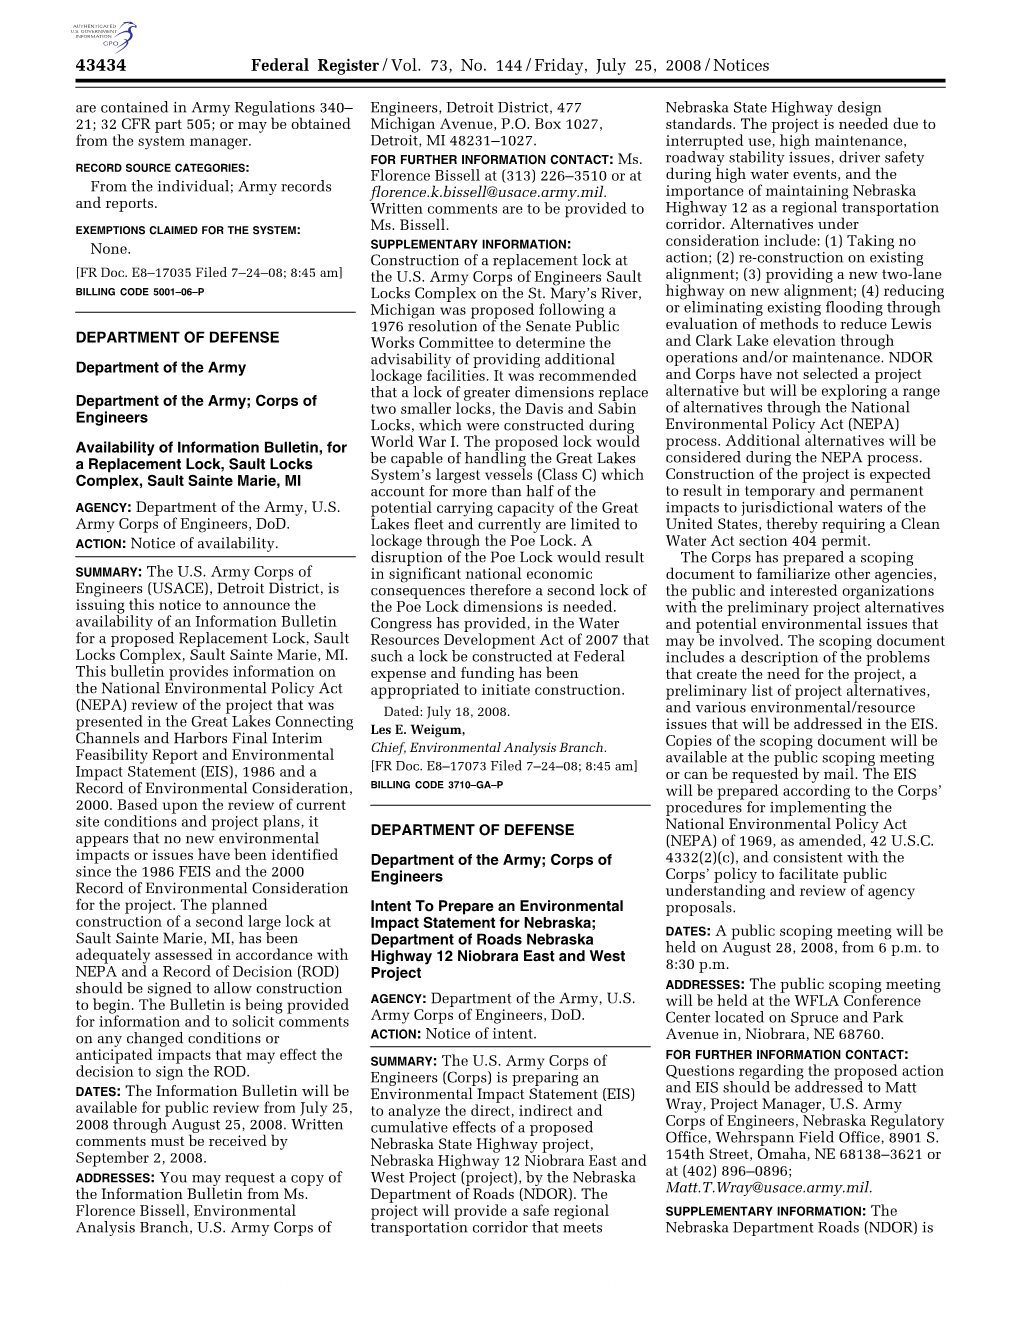 Federal Register/Vol. 73, No. 144/Friday, July 25, 2008/Notices